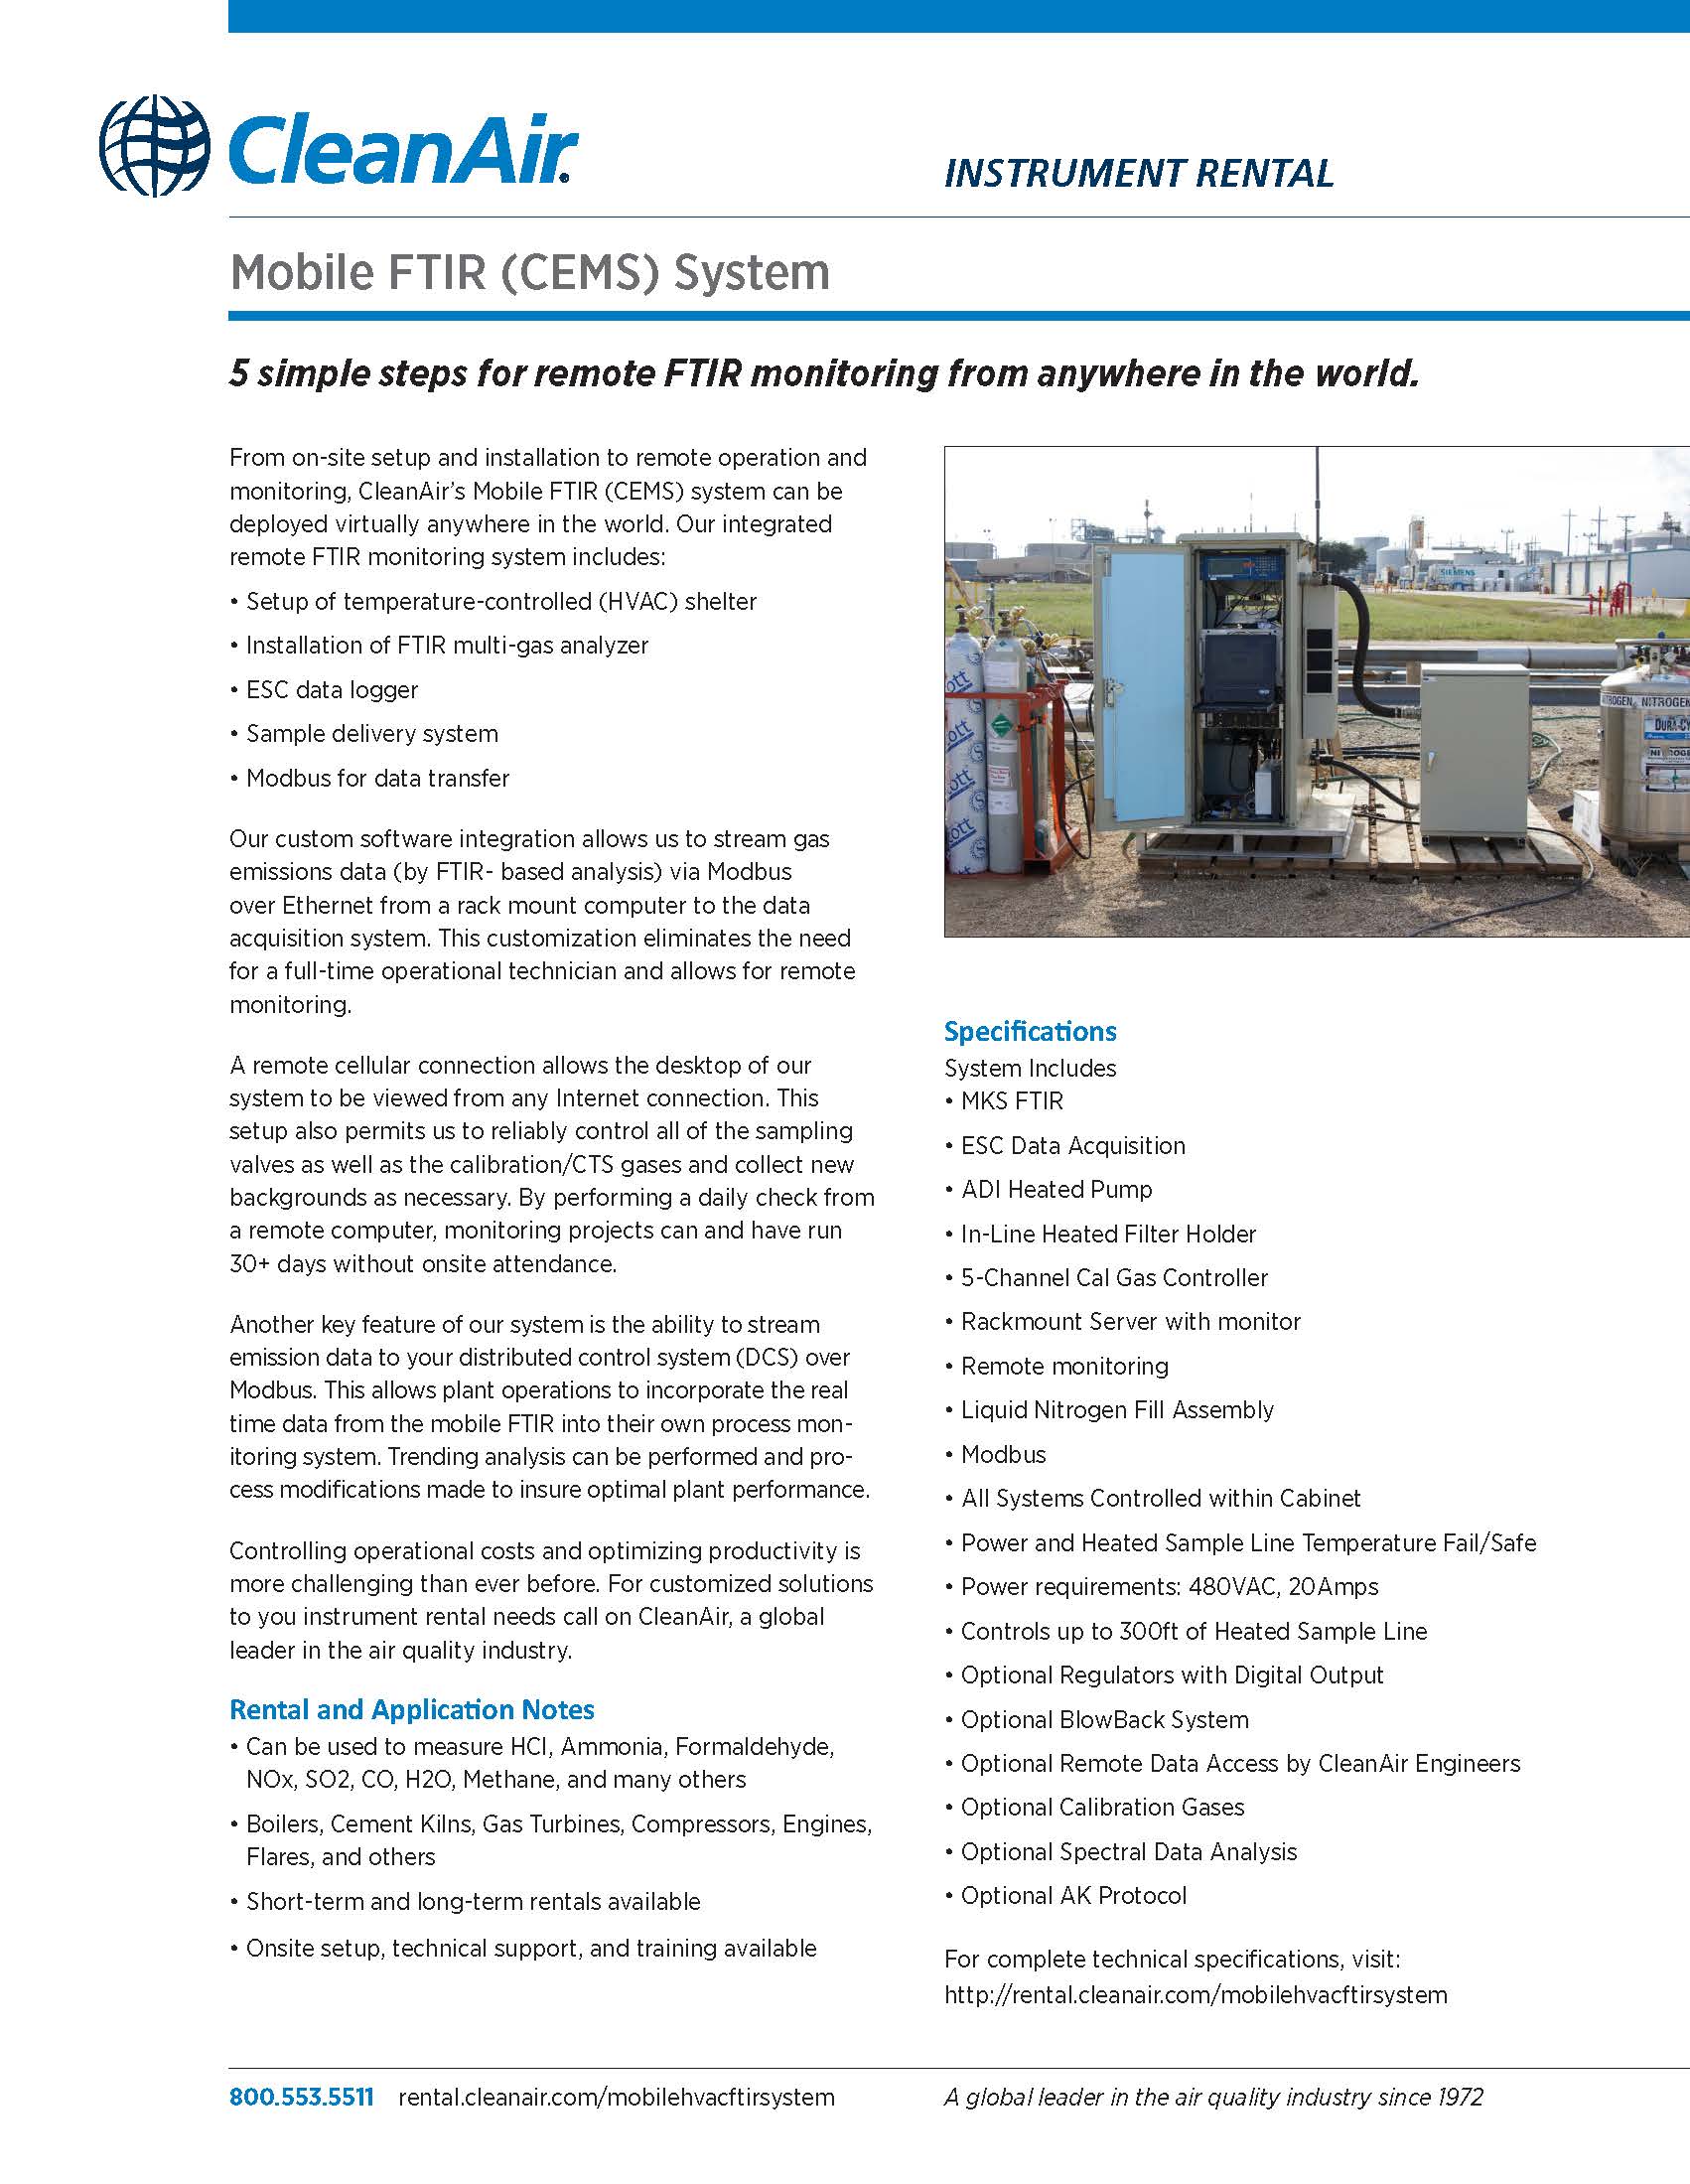 CleanAir-Mobile-FTIR-CEMS-System-brochure-thumb